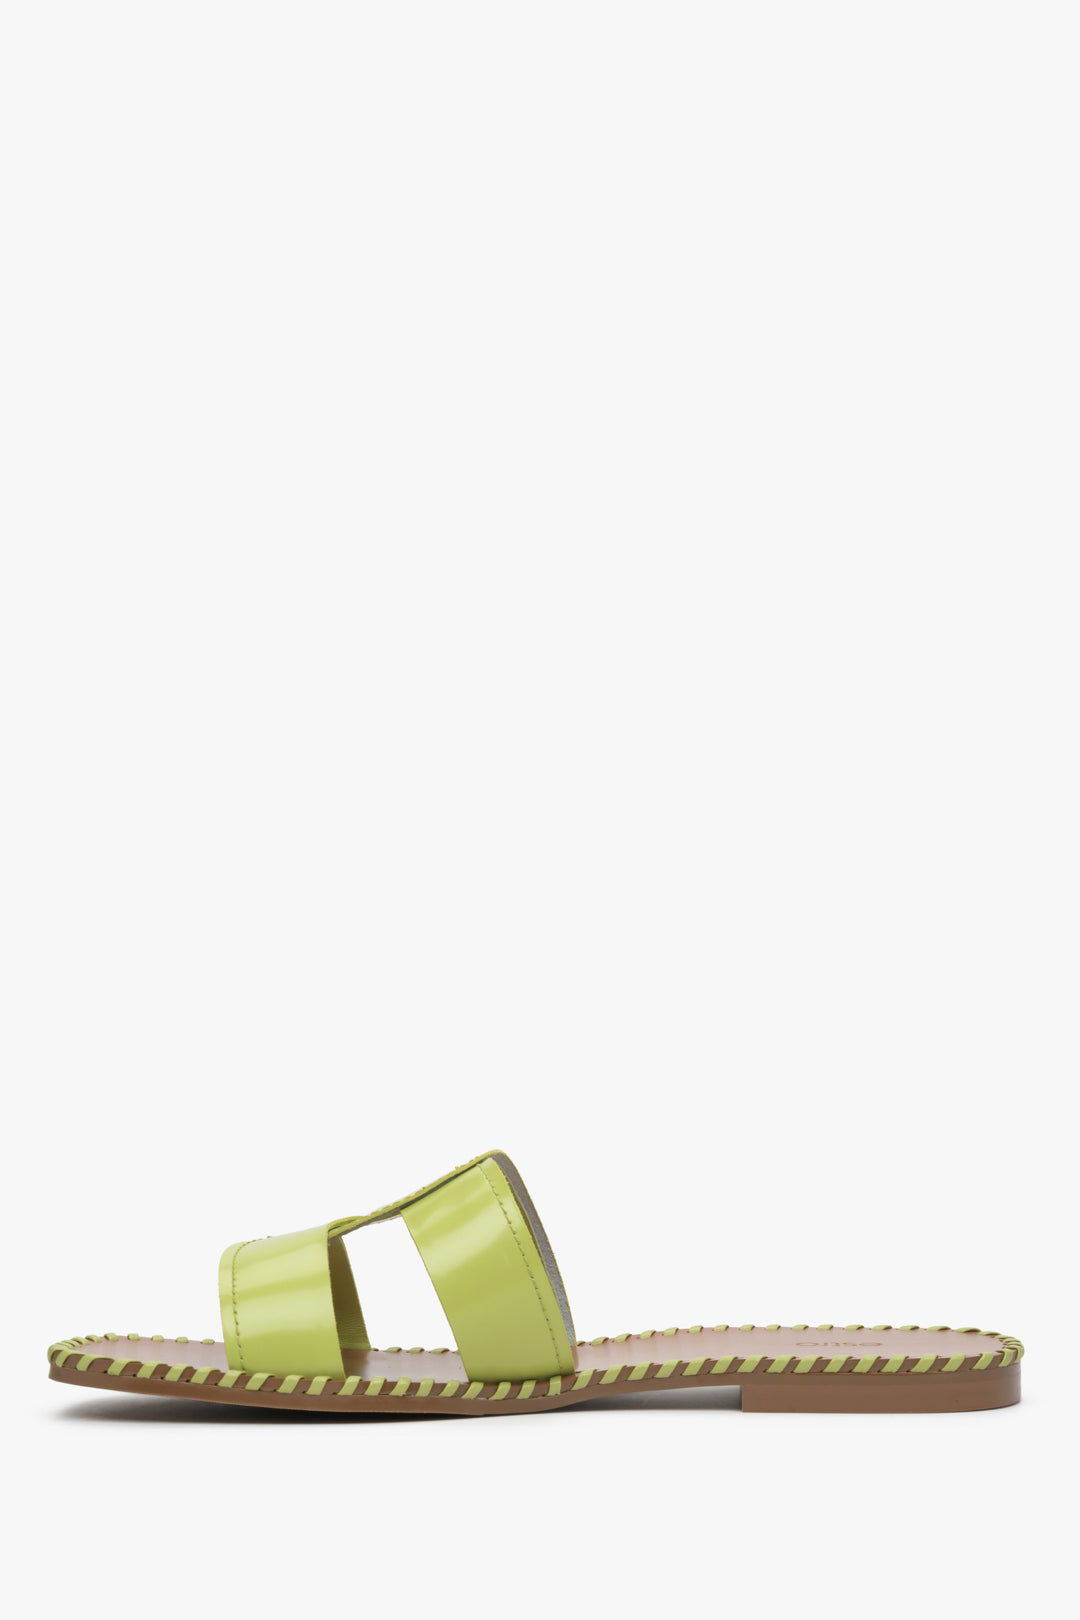 Women's green slide sandals made of genuine leather Estro - shoe profile.